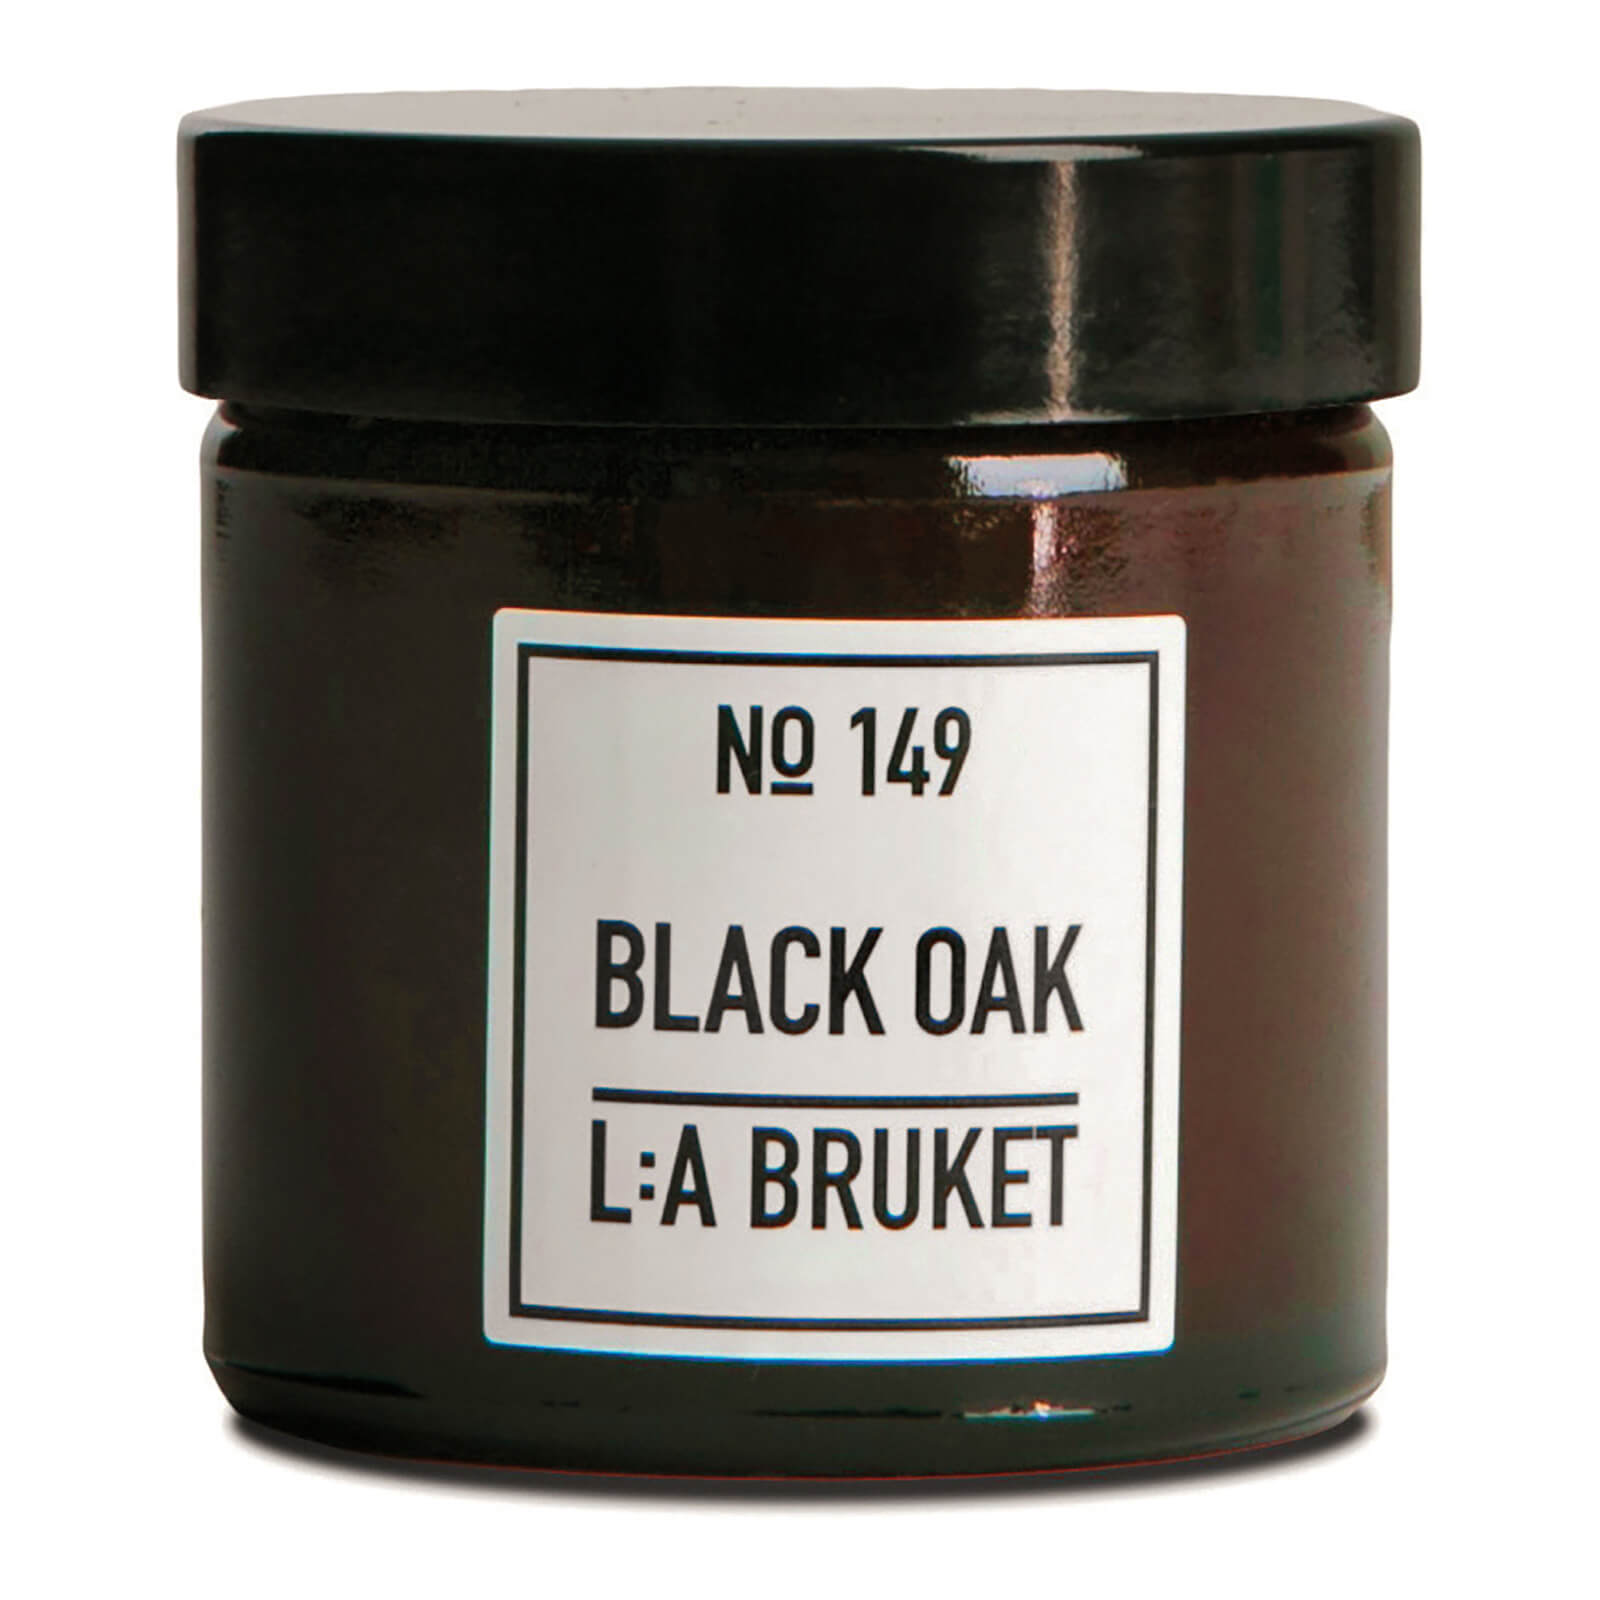 L:A BRUKET Small Black Oak Scented Candle 50g